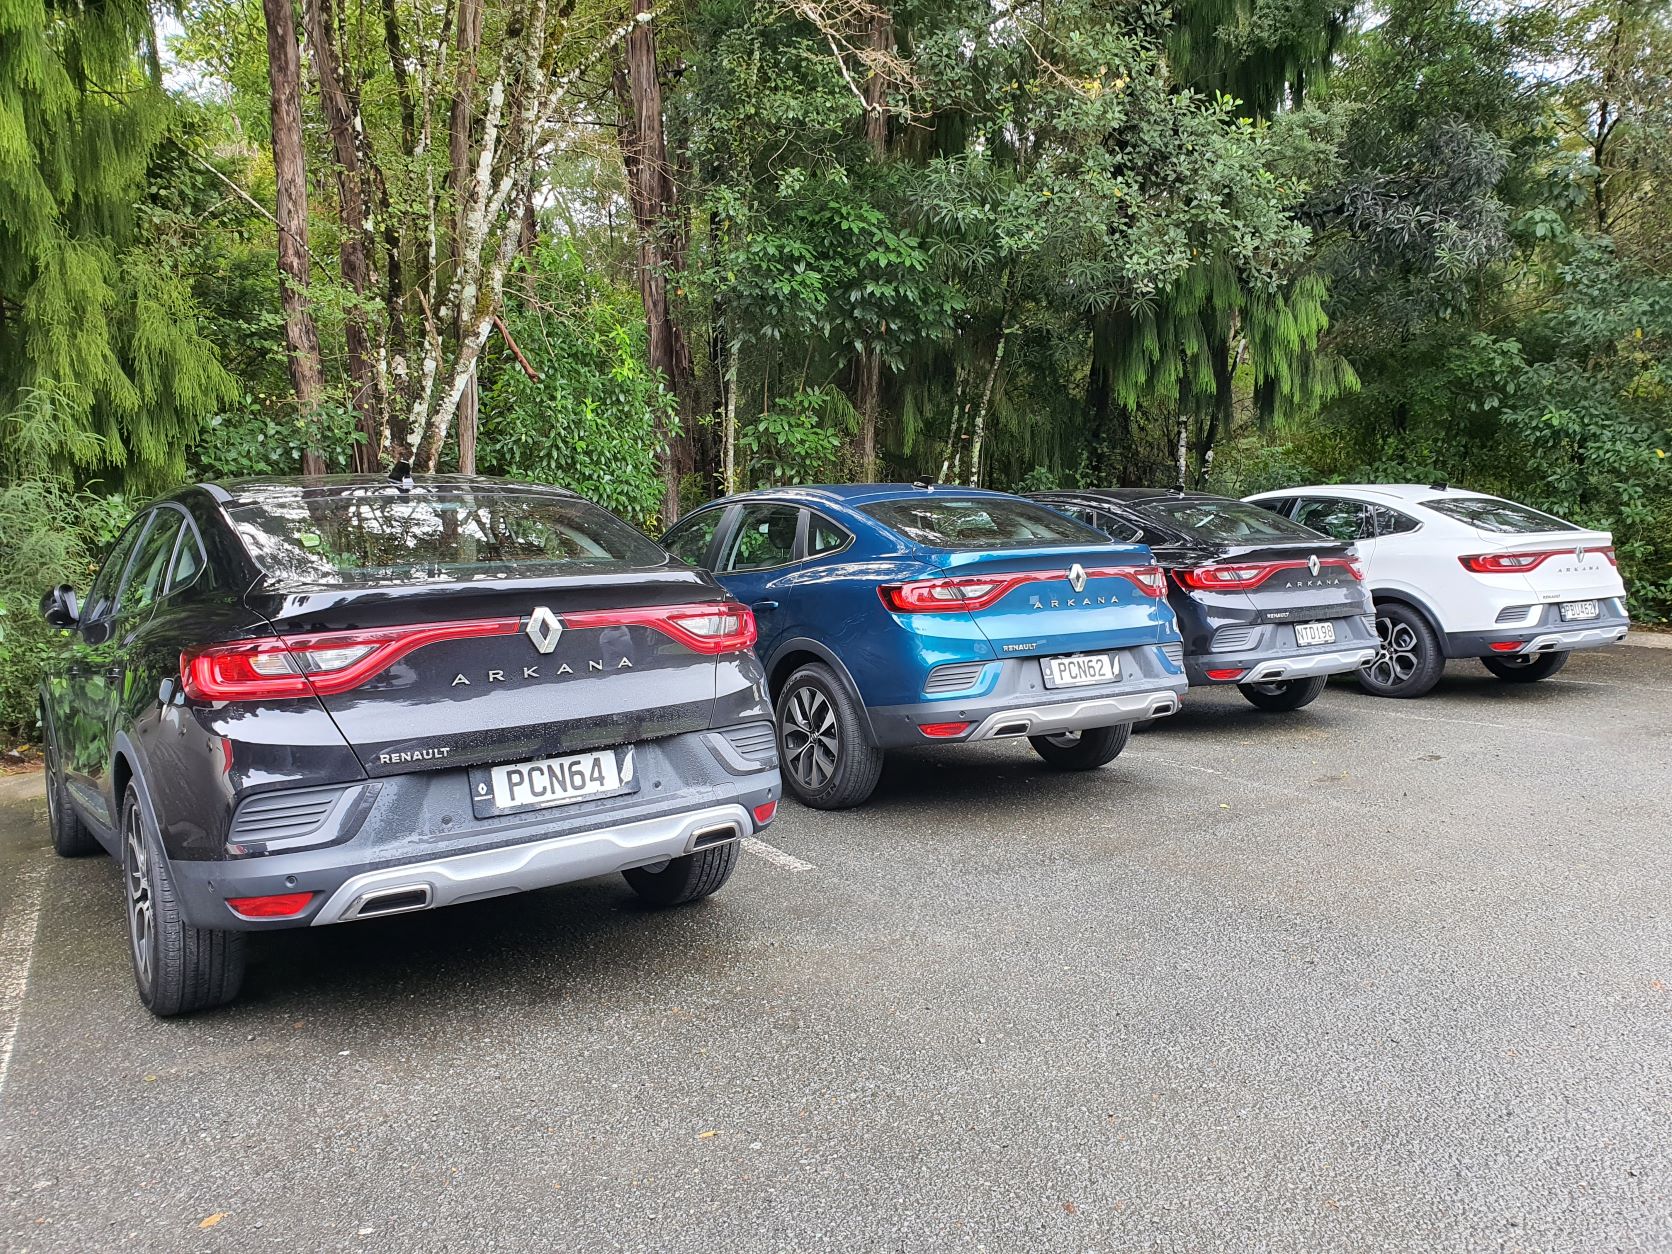 Four Renault Arkanas in a row at Pelorus Bridge Cafe in the Marlborough region of New Zealand